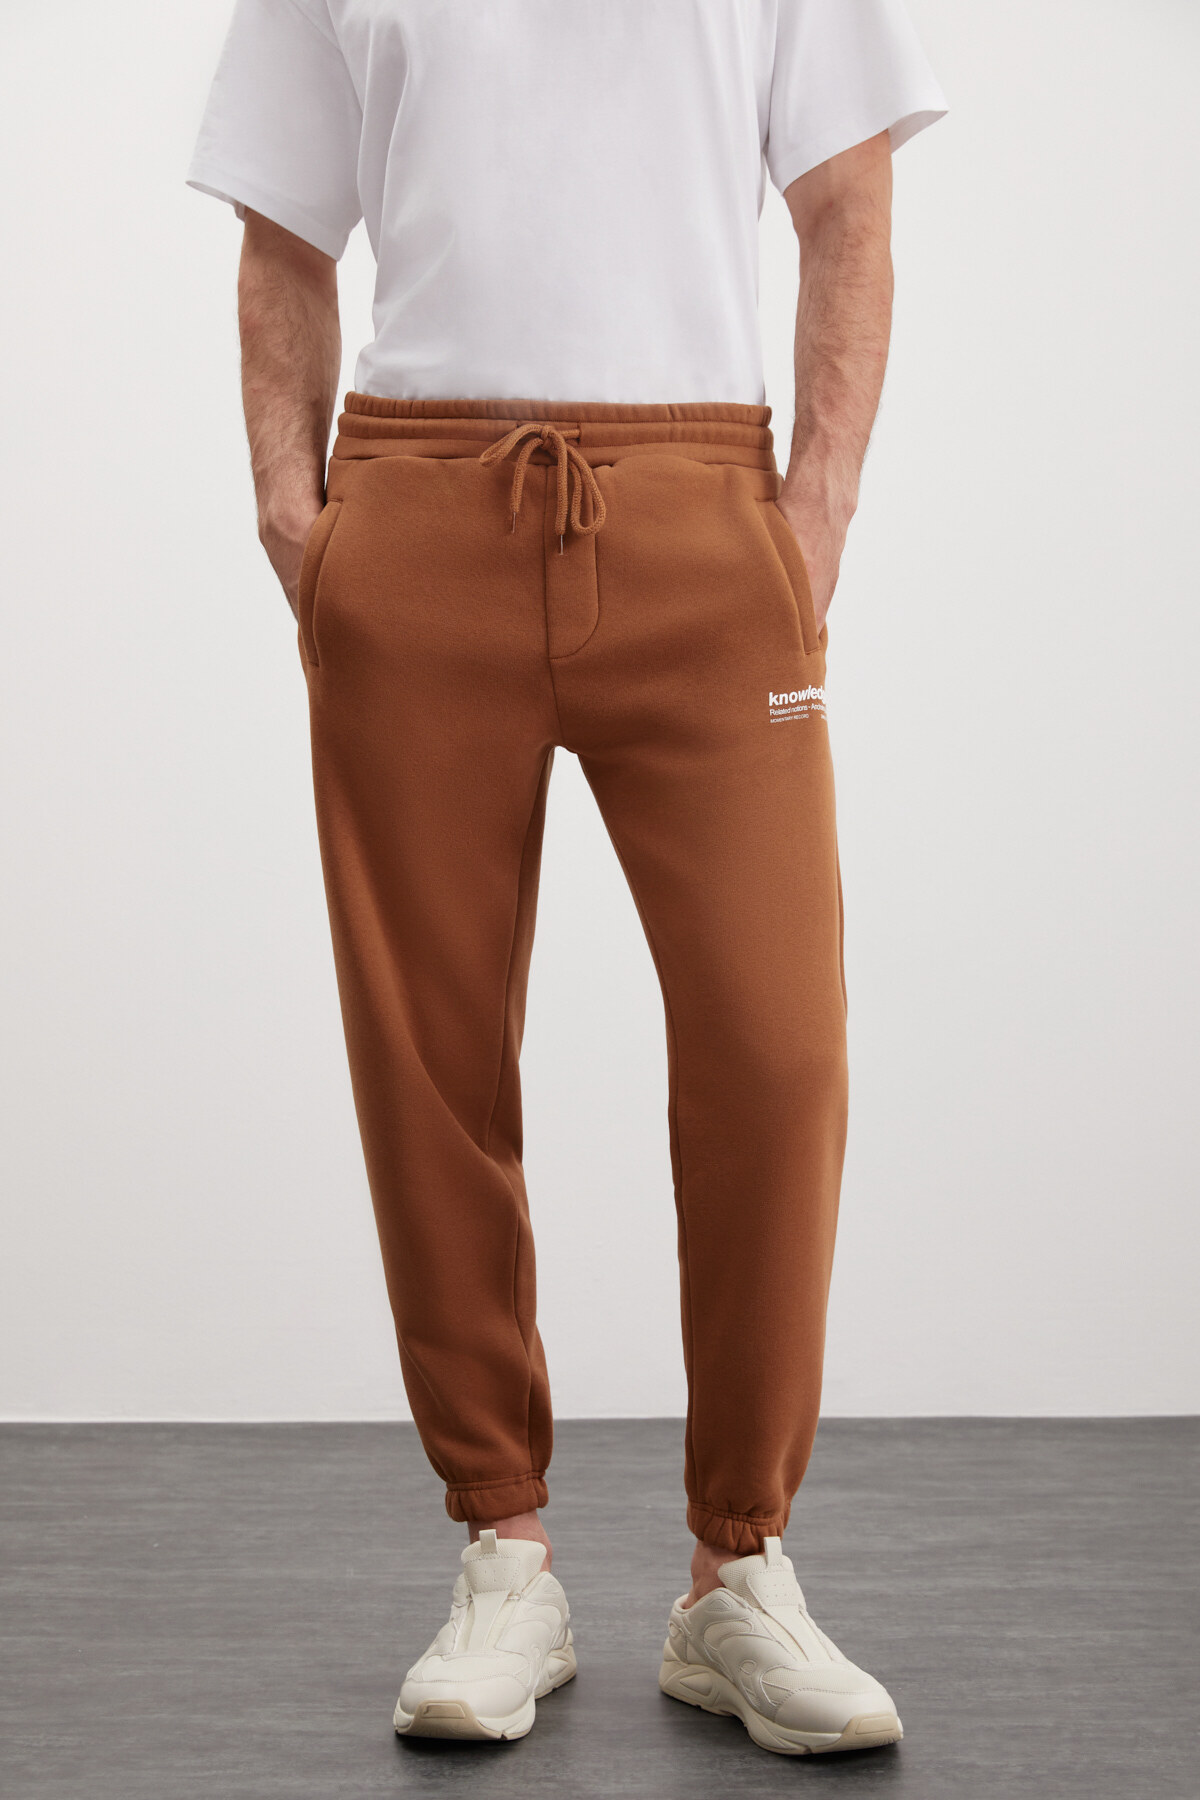 Levně GRIMELANGE Bernon Men's Soft Fabric, Elasticized Three-Pocket Light Brown Sweatpant